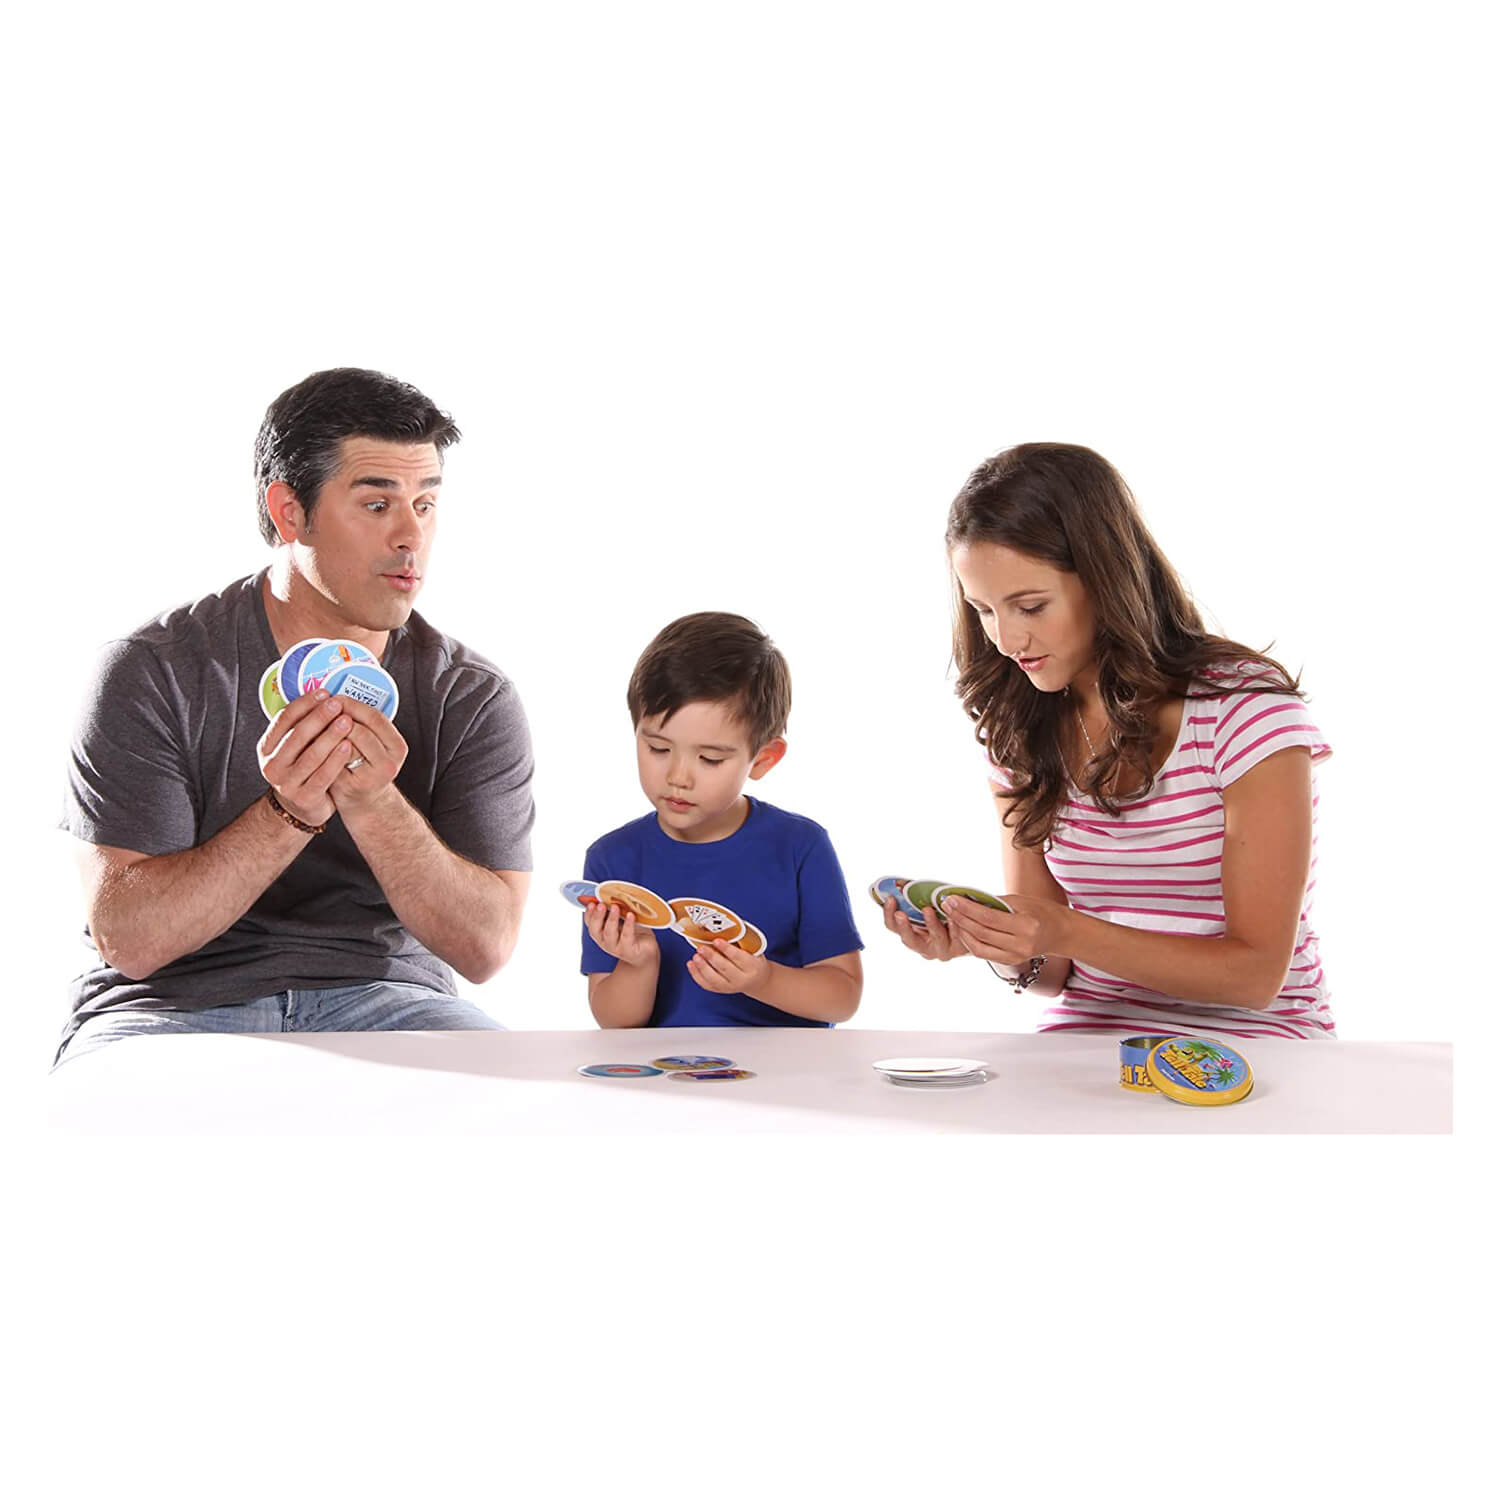 Family honlding game cards together.